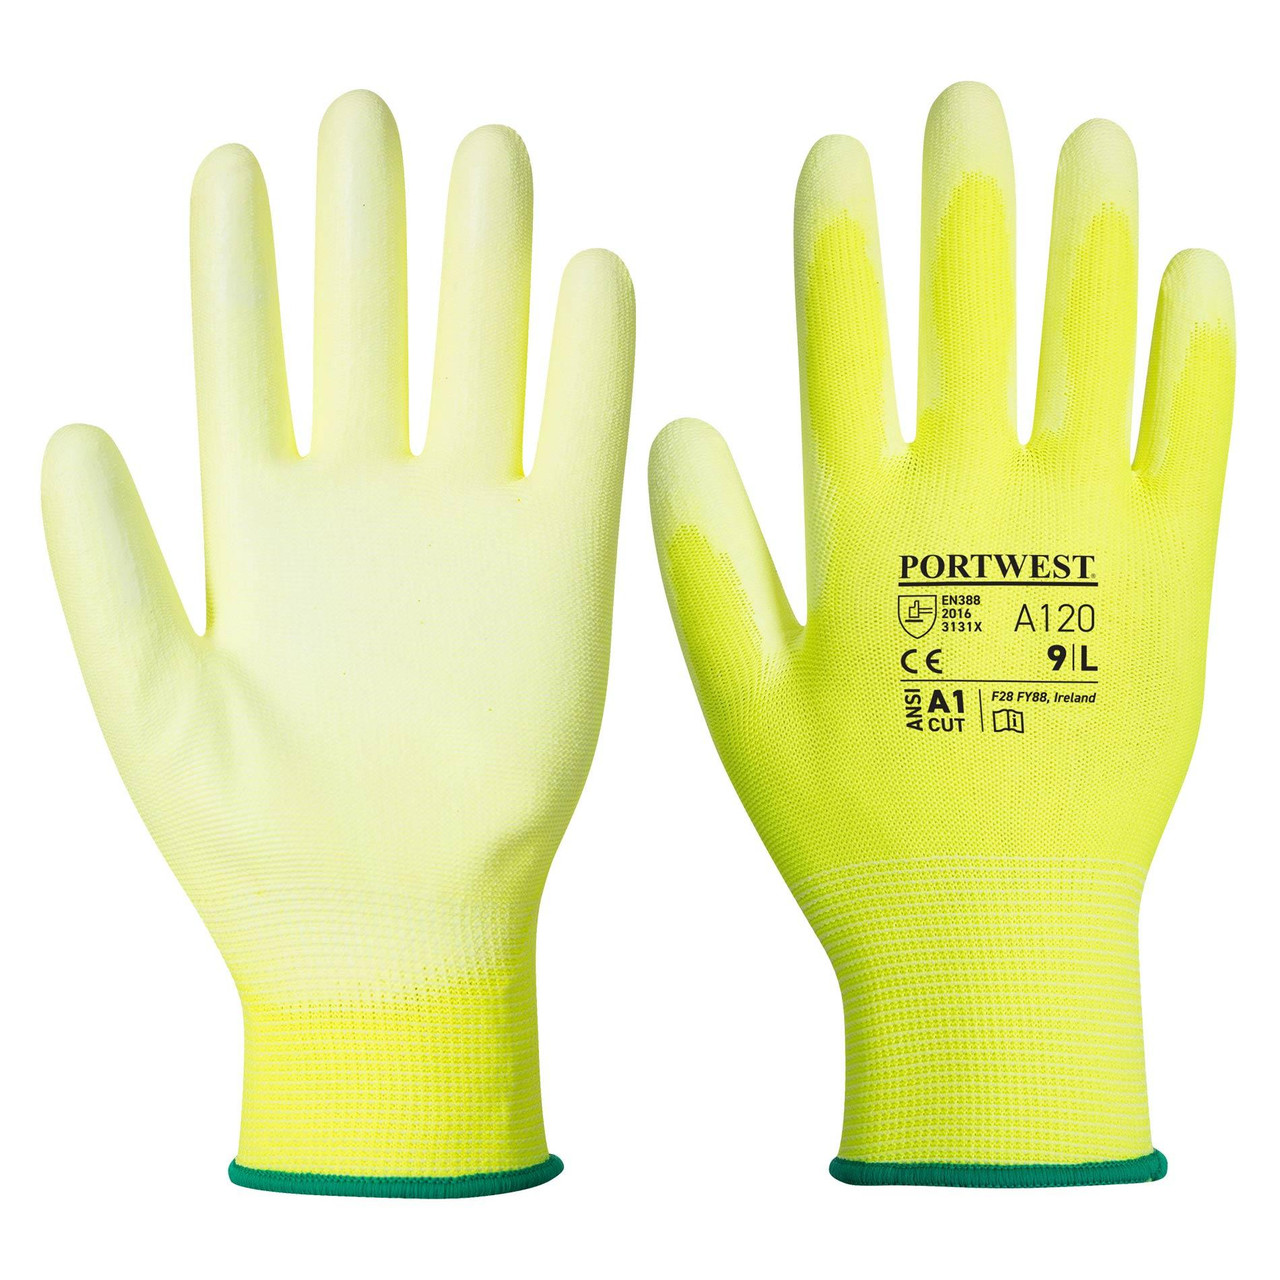 Pyramex GL614 - Nitrile Smooth Dipped Gloves XL